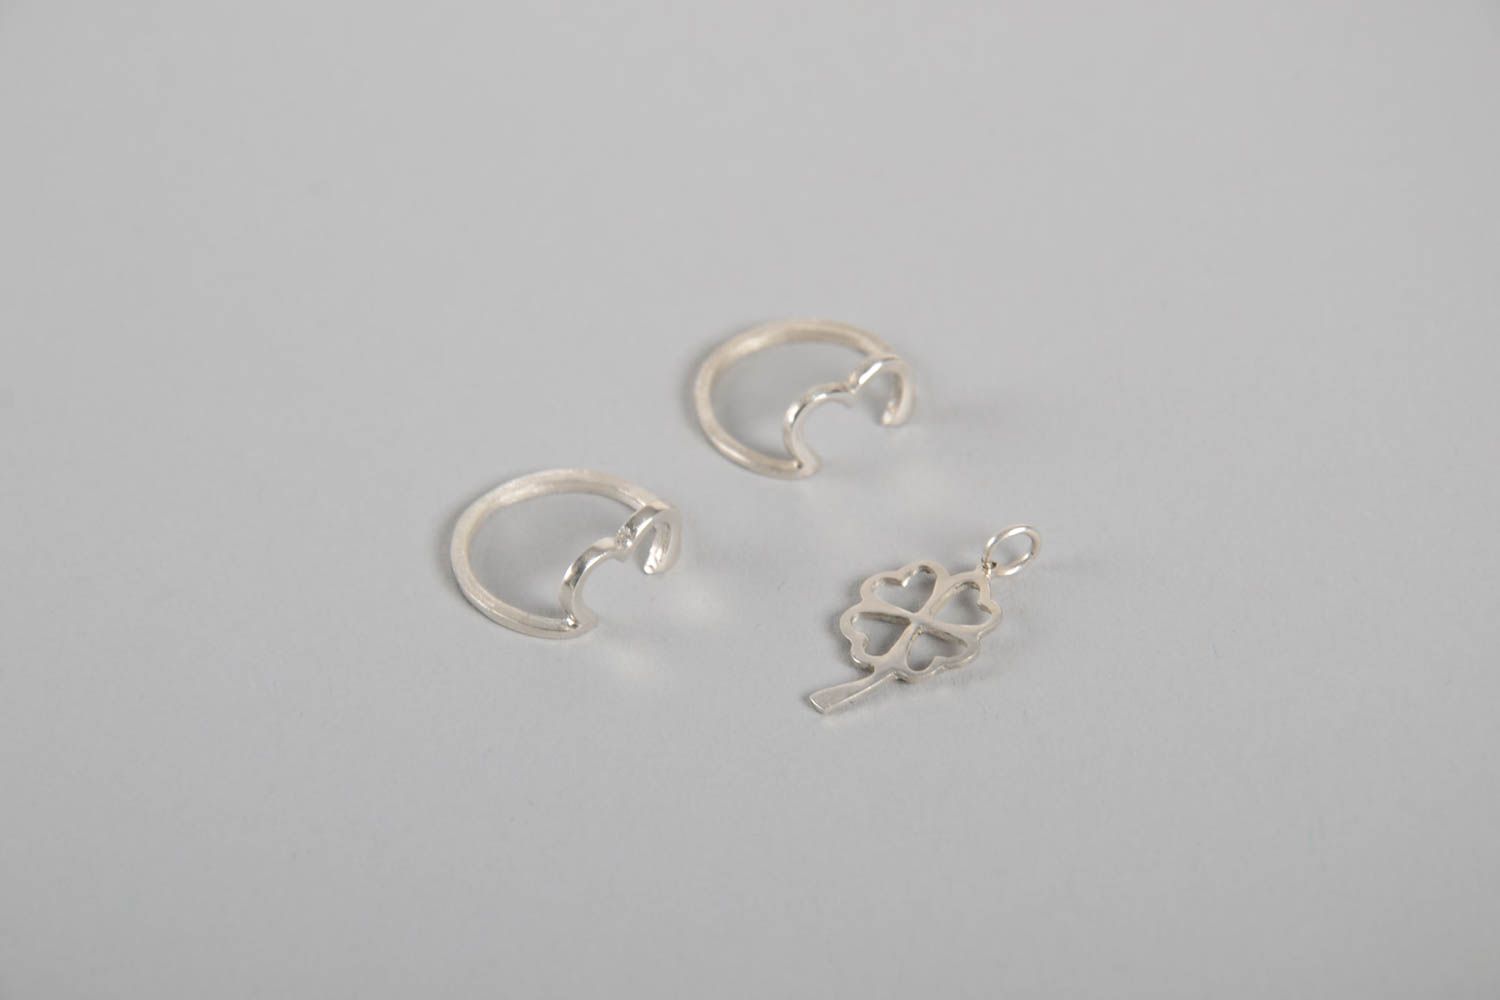 Handmade rings designer pendant unusual accessories gift ideas jewelry set  photo 5